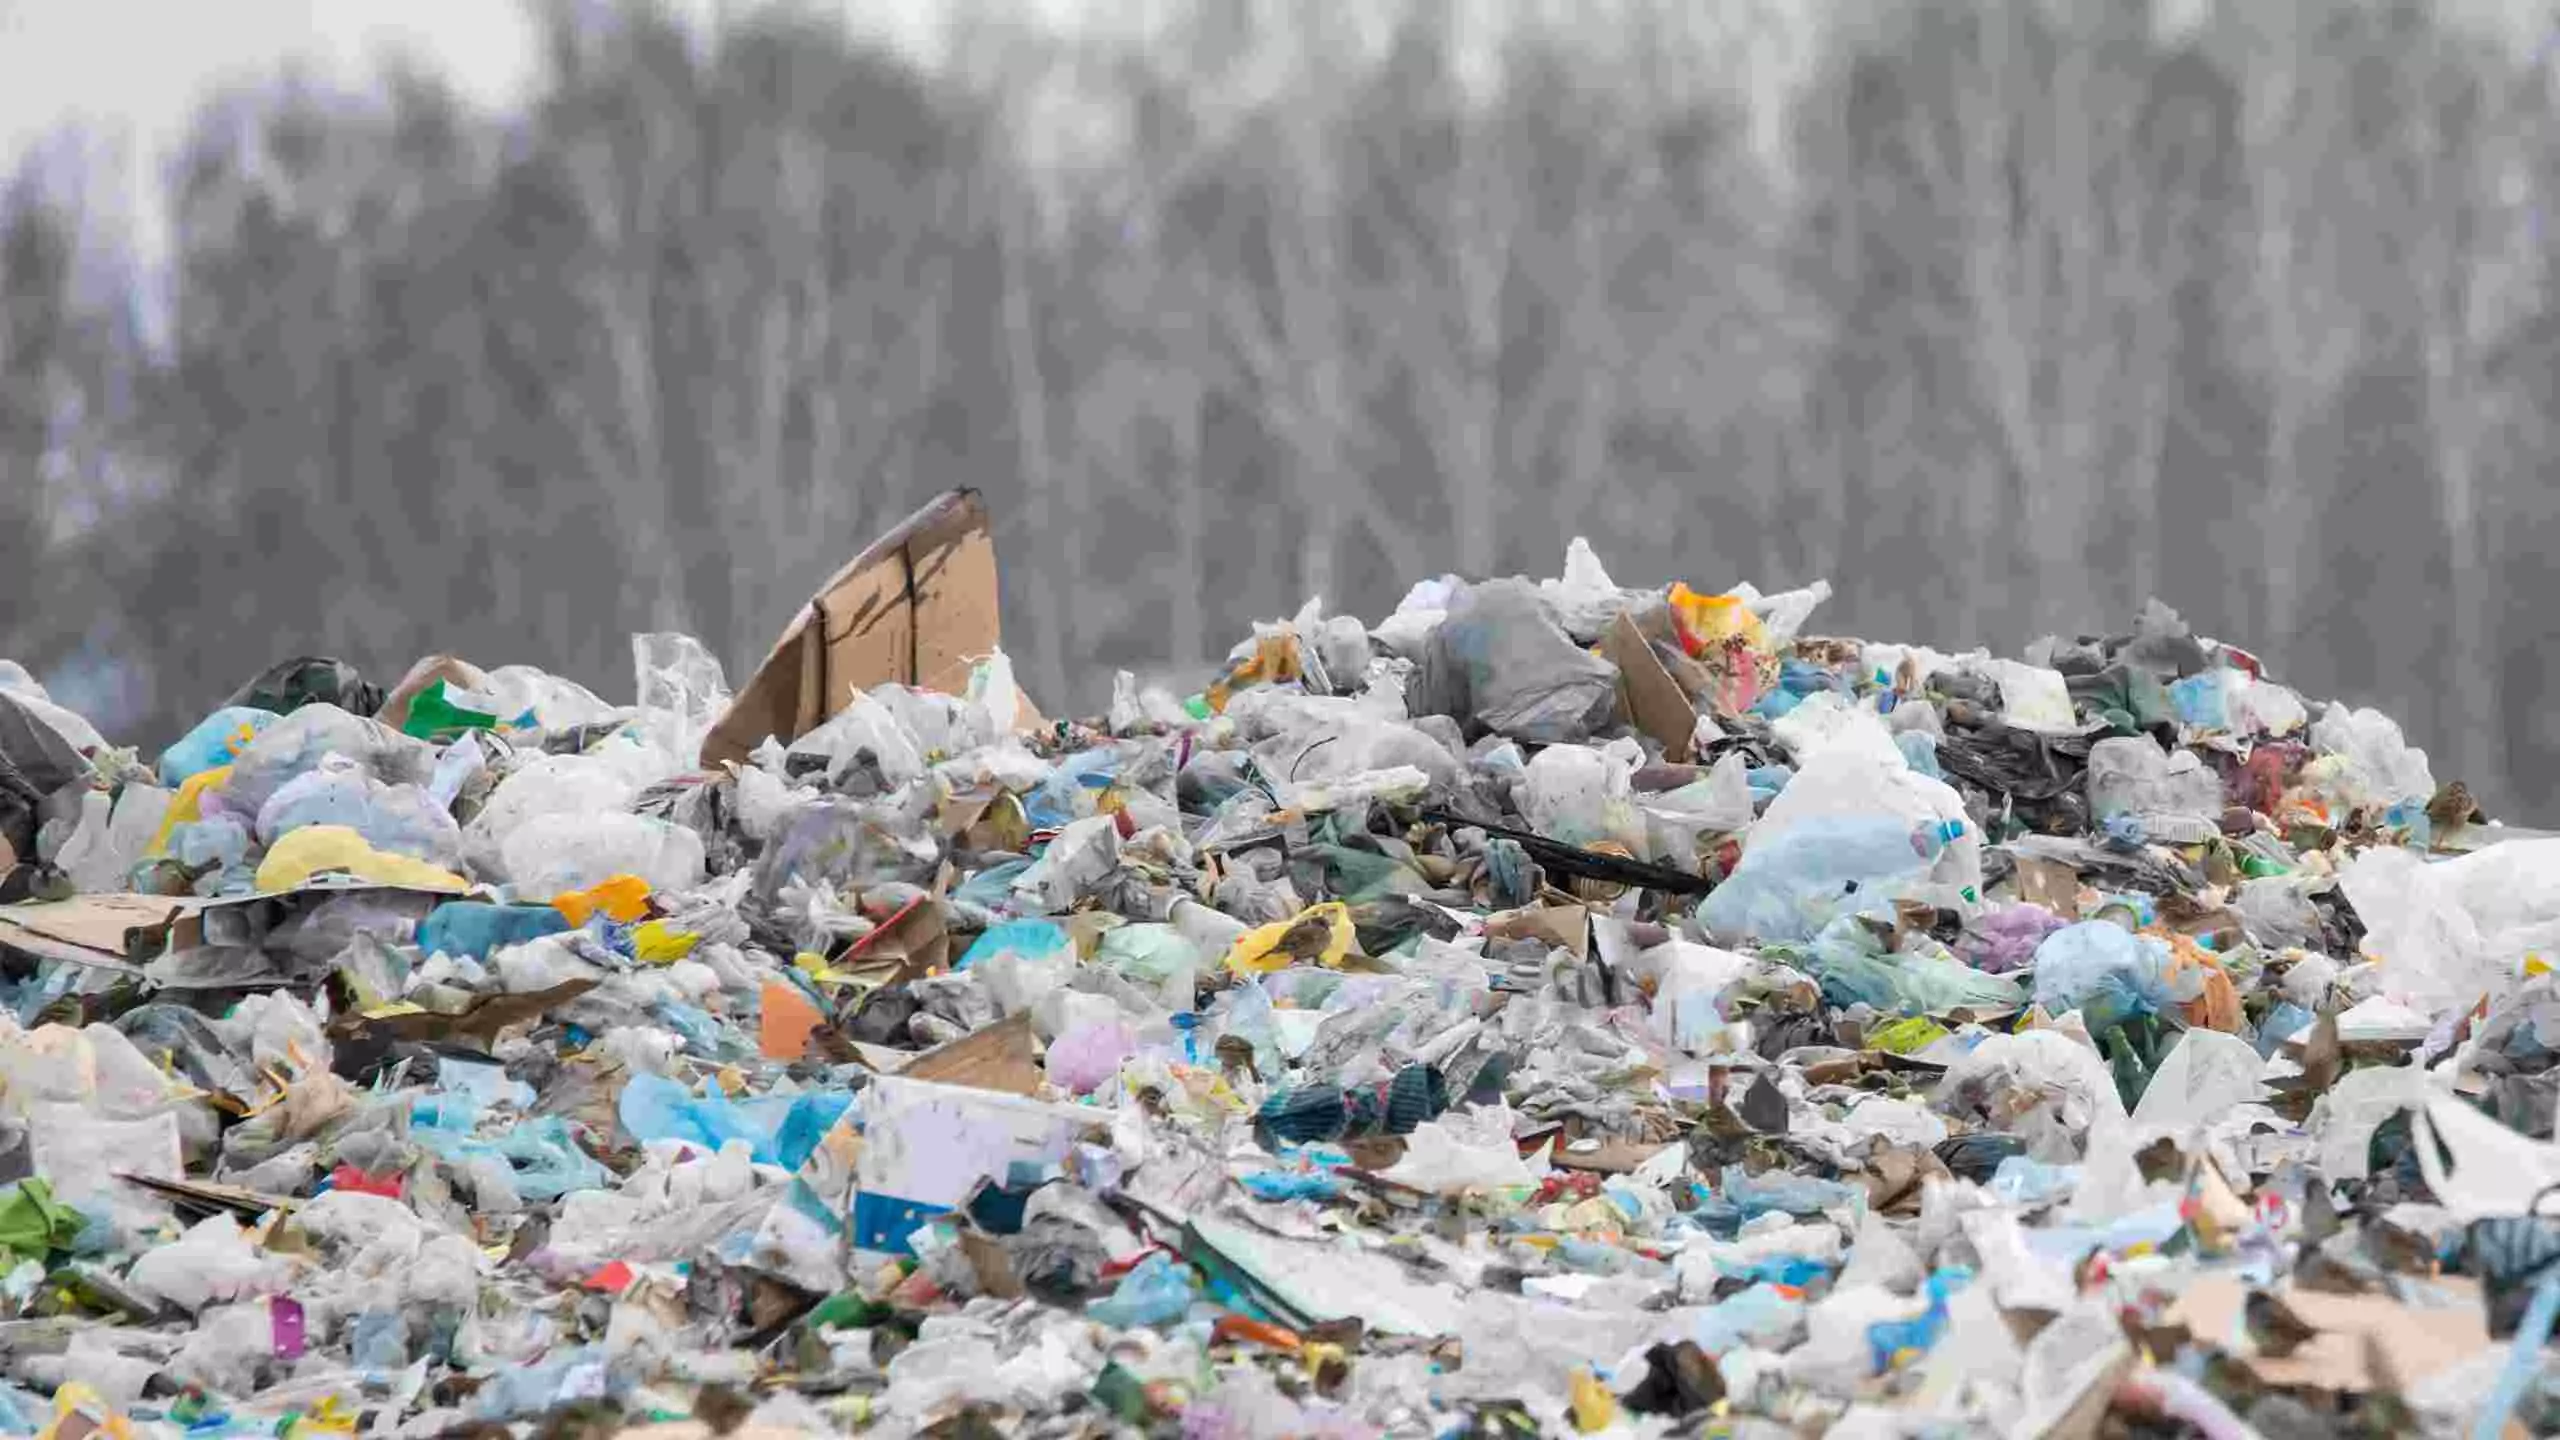 Plastics waste or raw materials